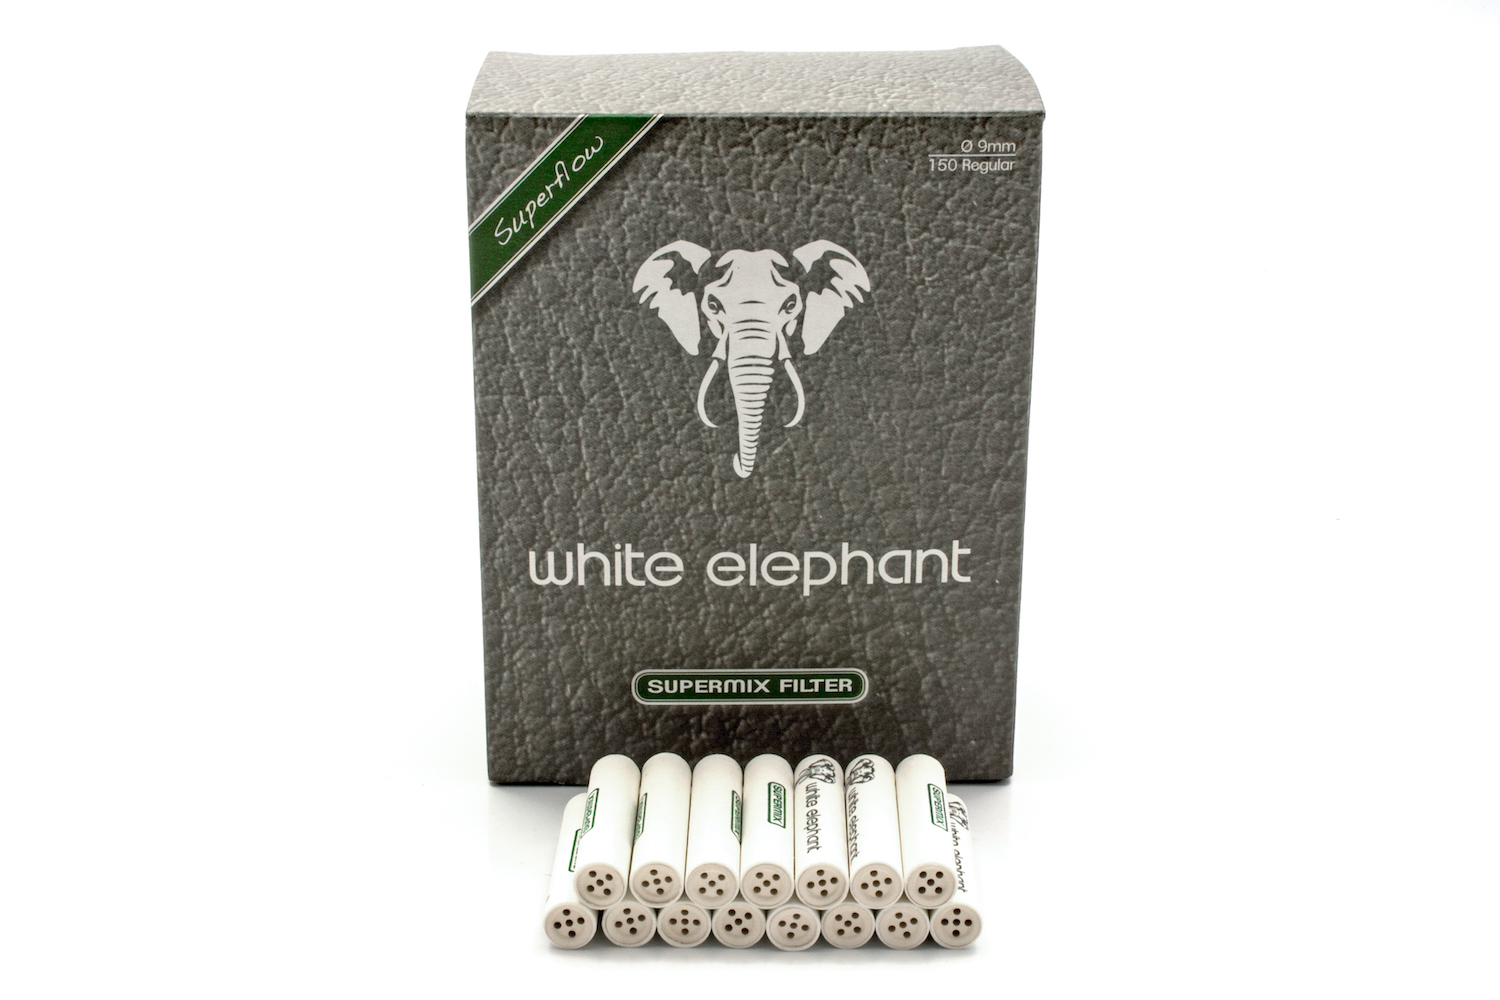 White Elephant 150 Super Mix Filter 9mm (10x)